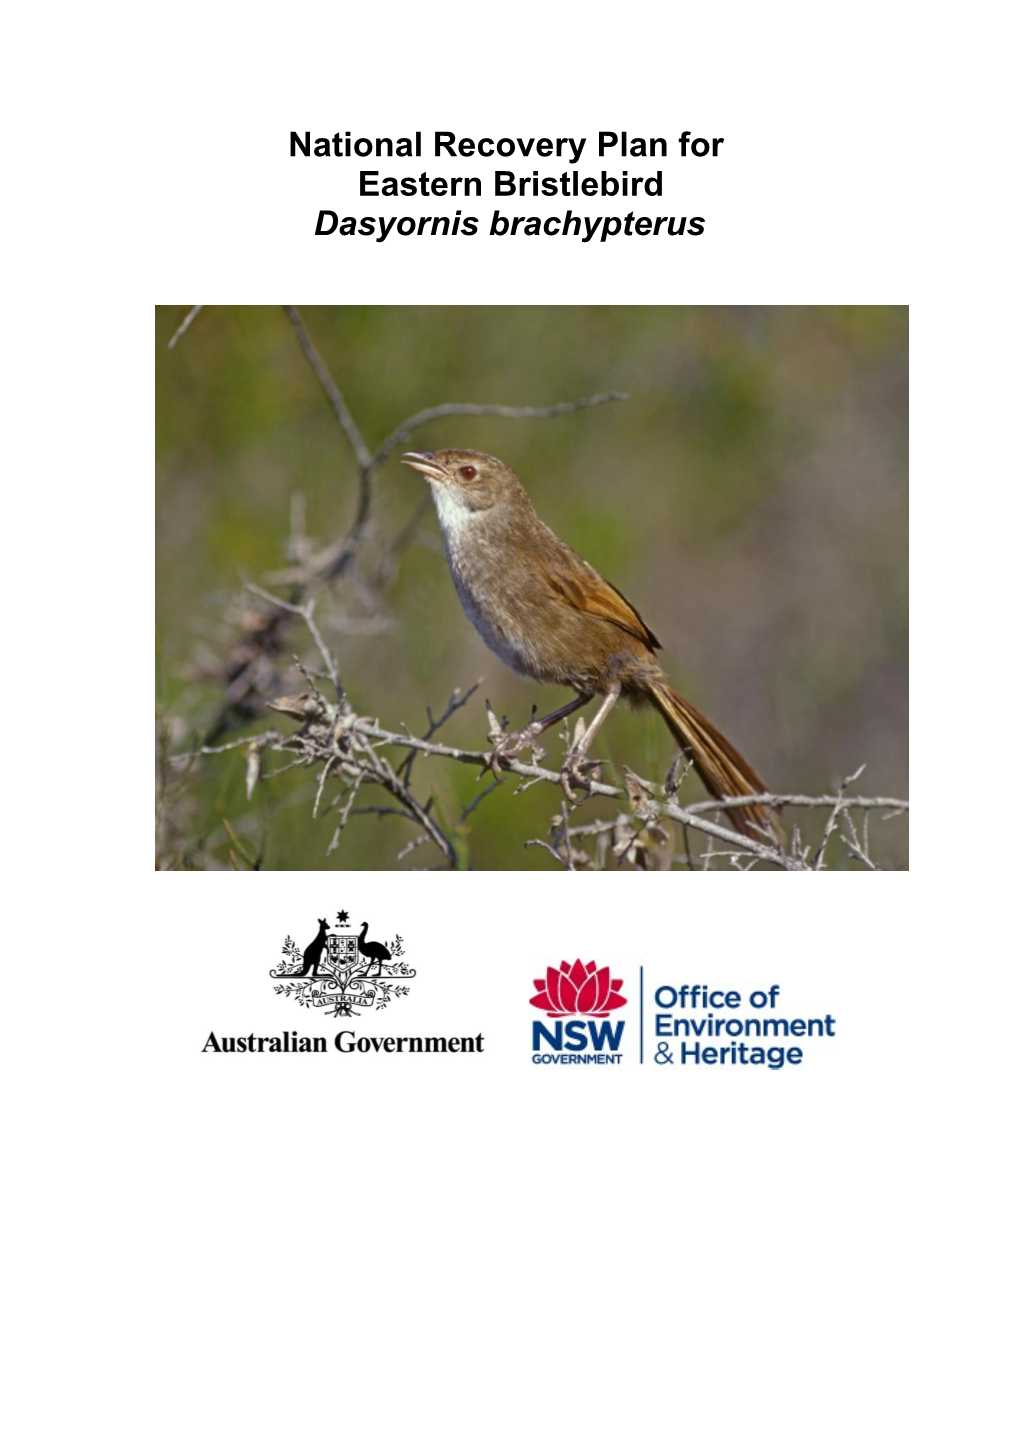 National Recovery Plan for Eastern Bristlebird Dasyornis Brachypterus